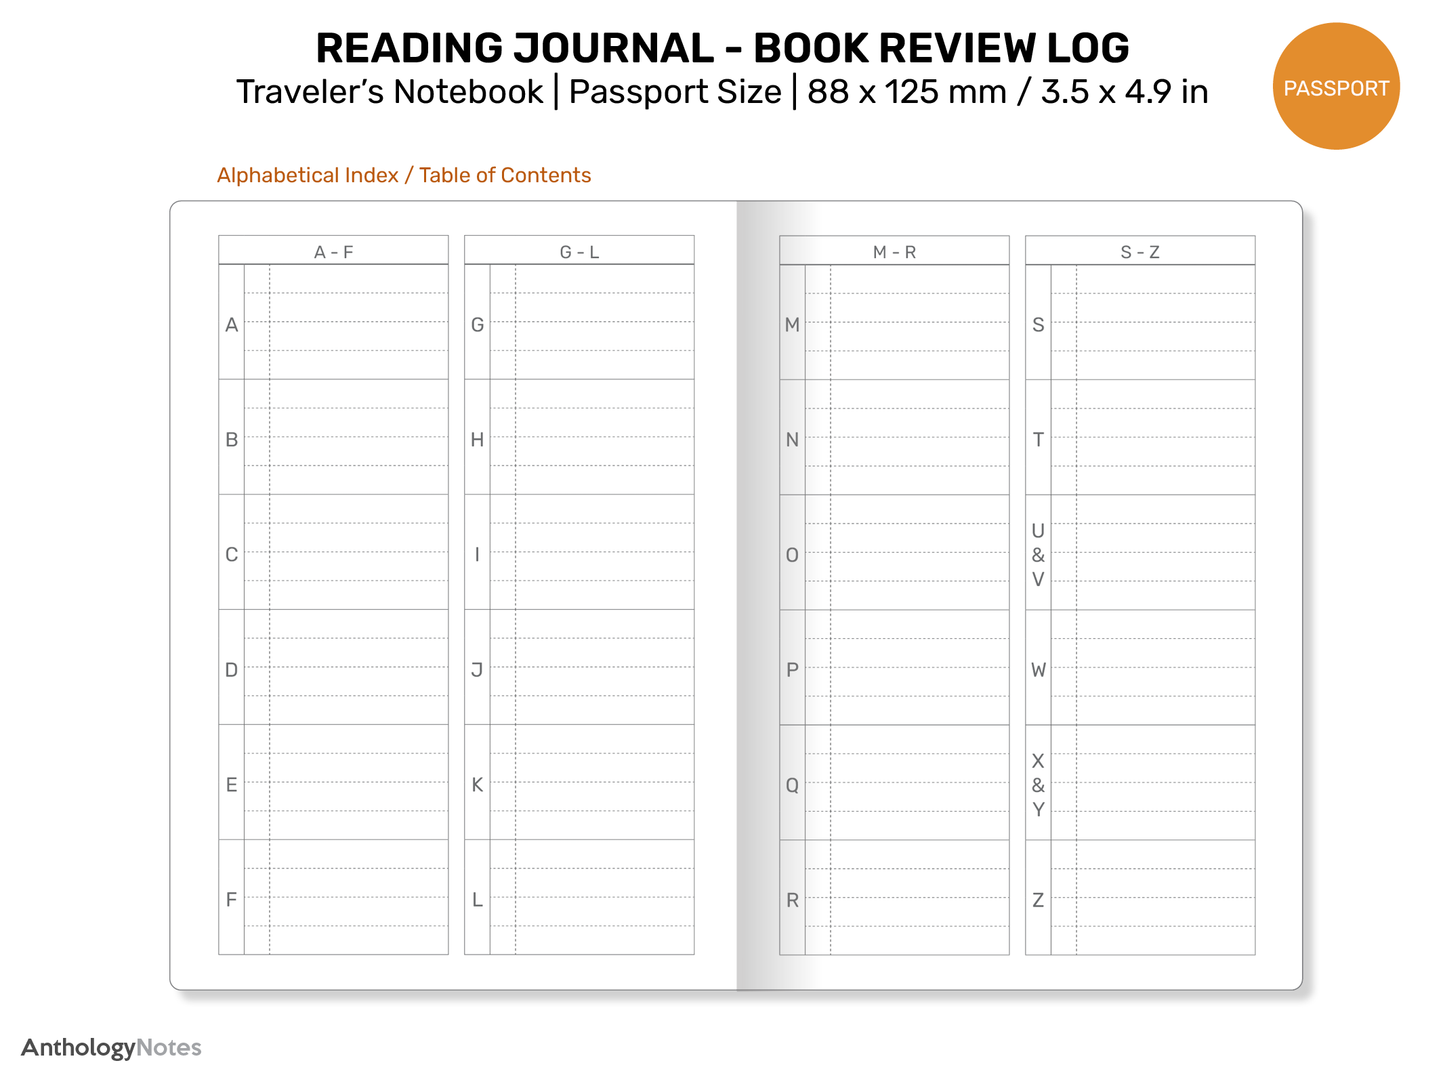 TN Passport READING Journal Printable Refill Insert for Traveler's Notebook - Book Review Log